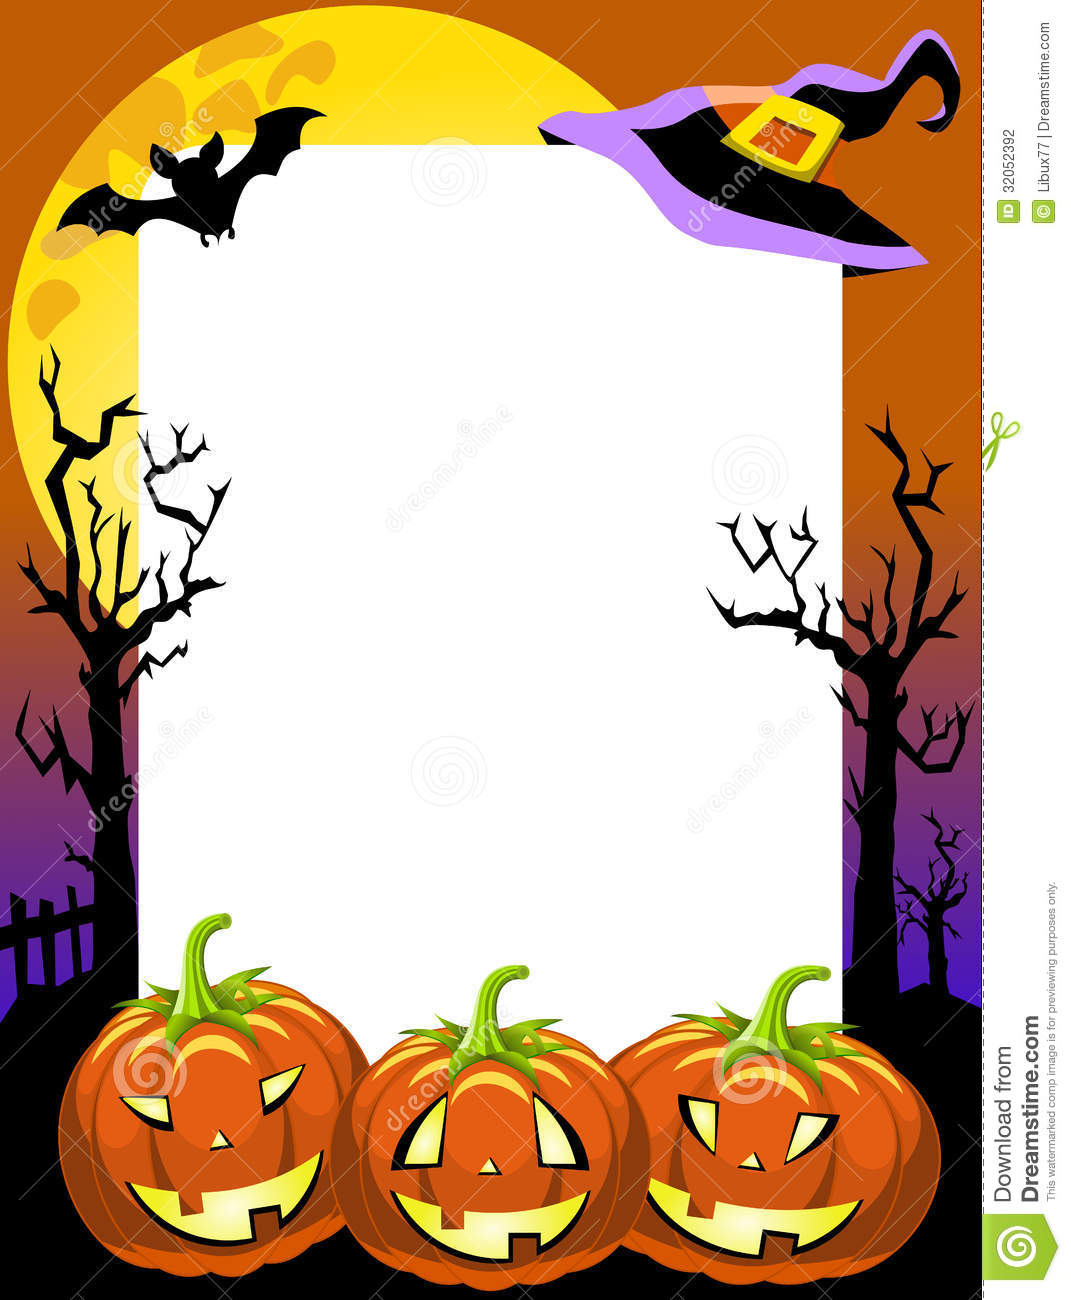 Cadre De Photo De Halloween [1] Photographie Stock - Image: 32052392 dedans Photo Halloween Gratuit